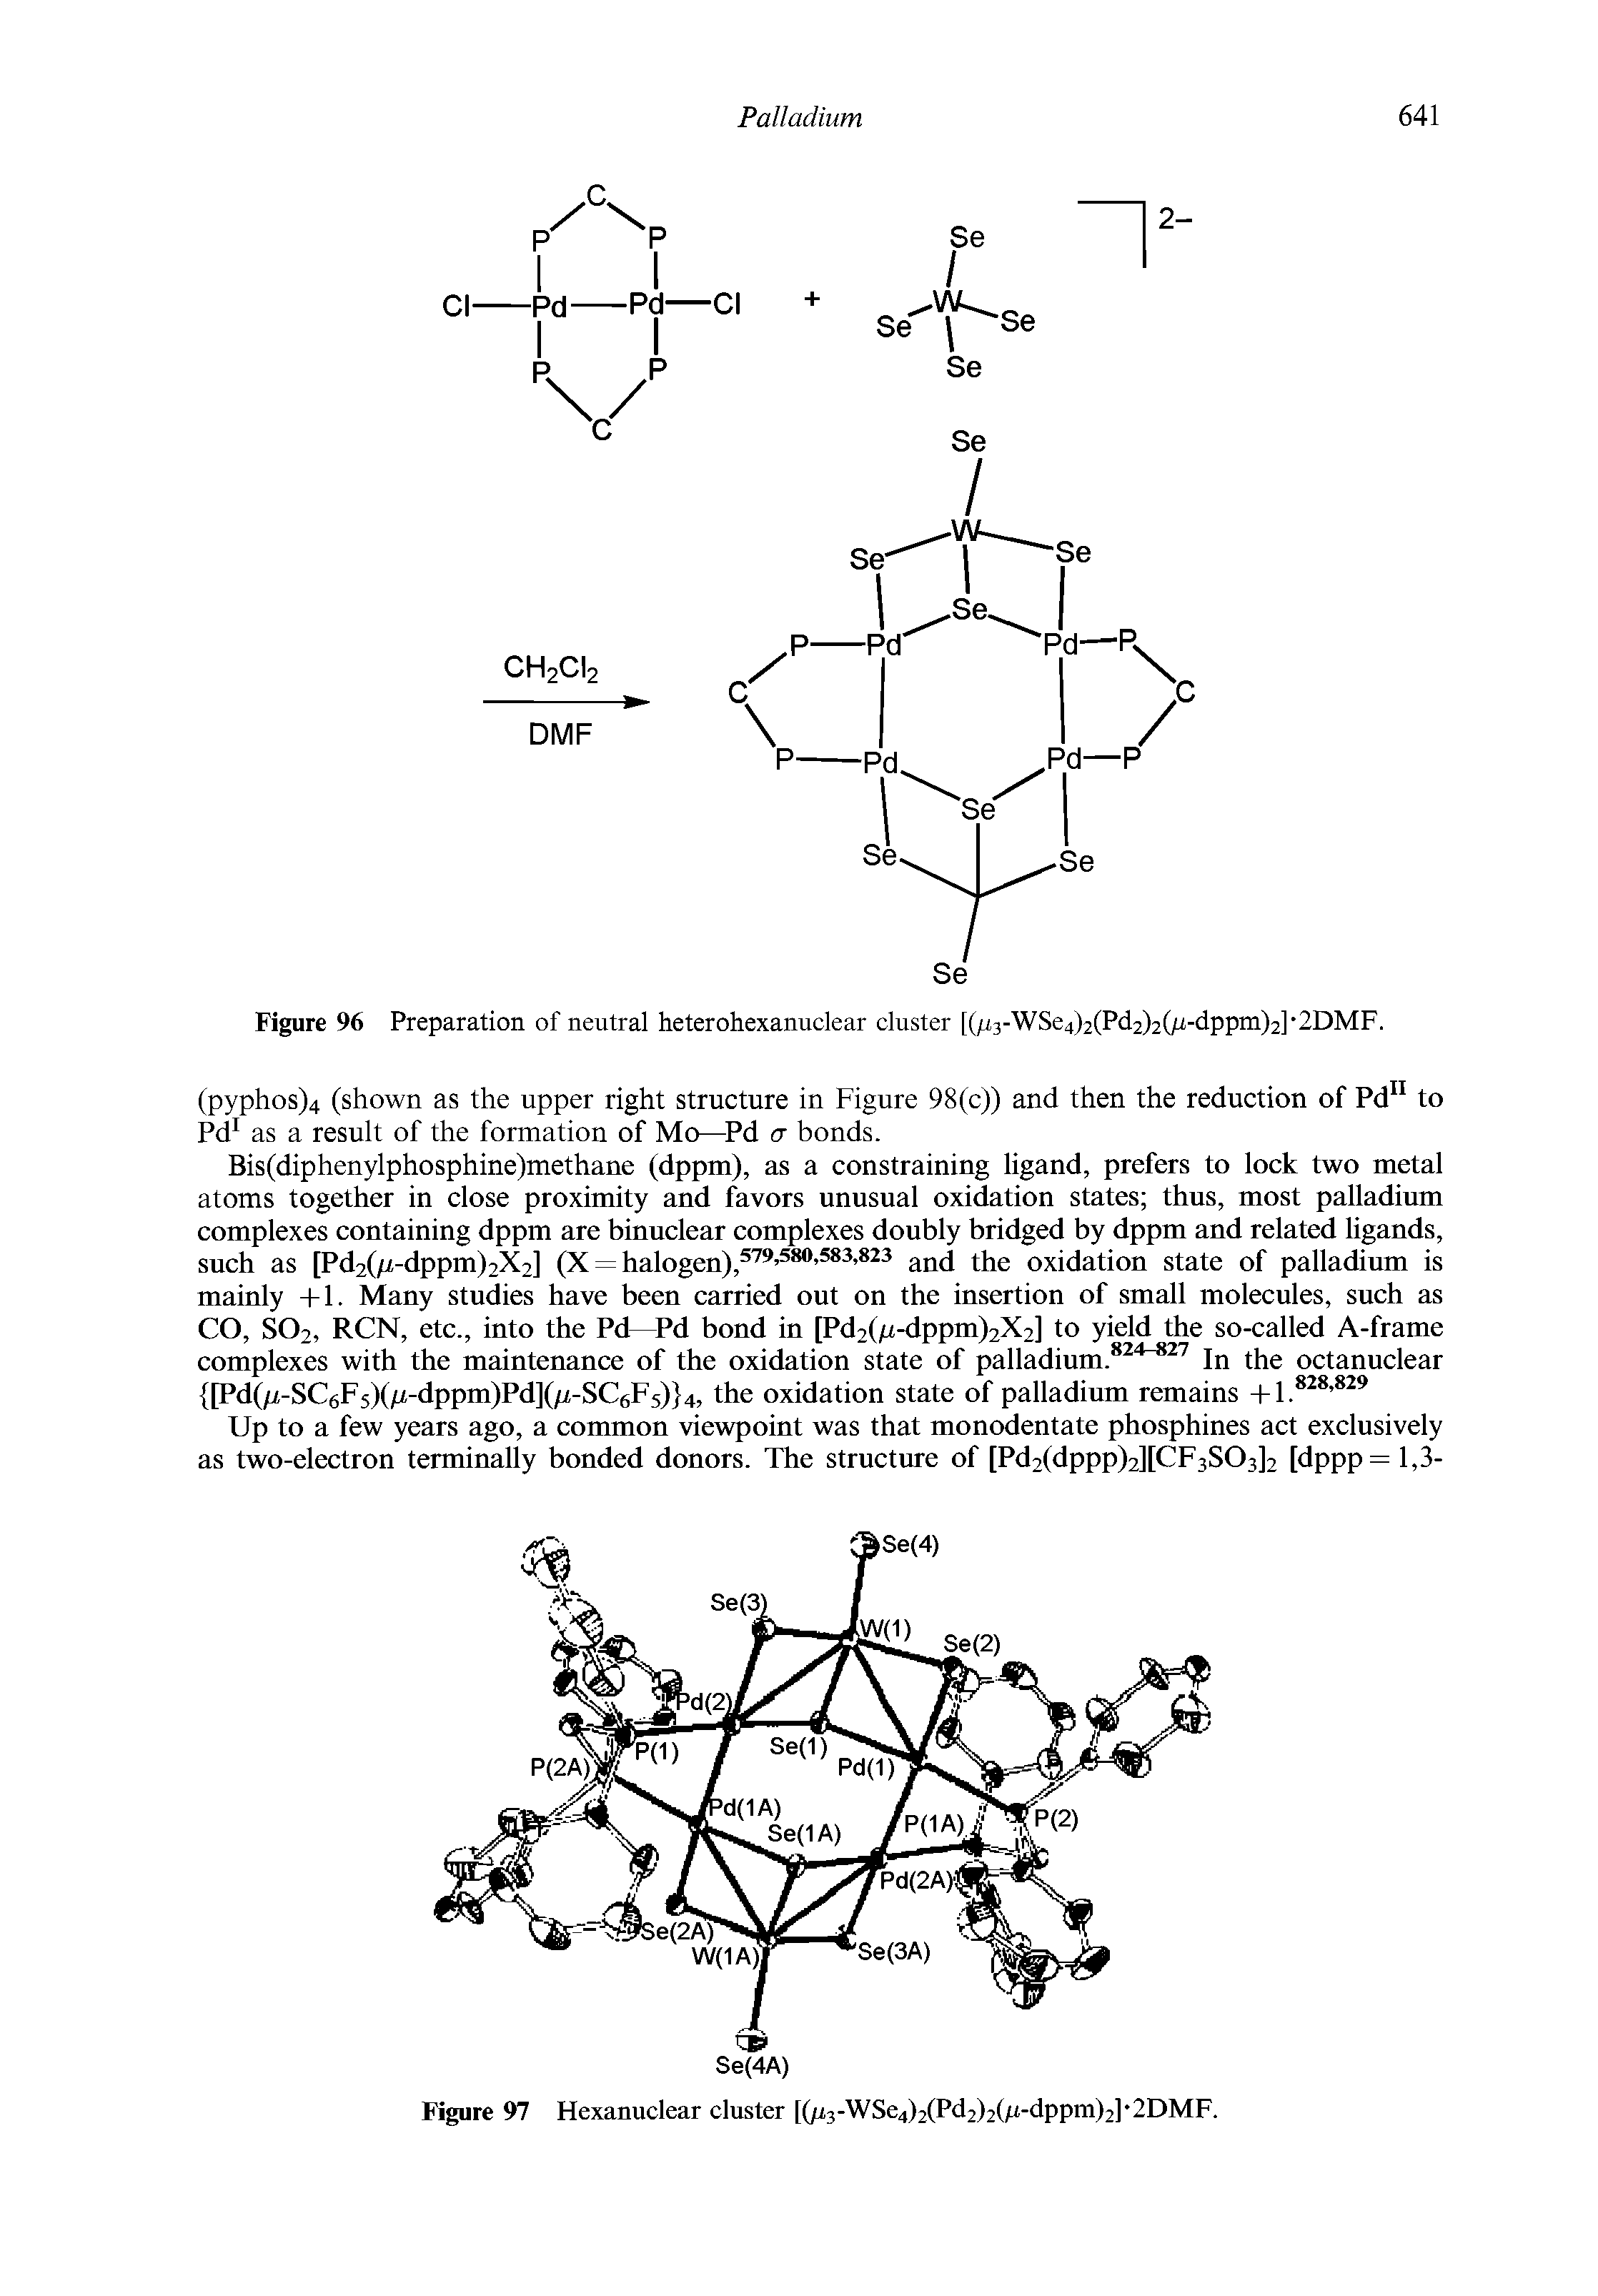 Figure 97 Hexanuclear cluster [(/i3-WSe4)2(Pd2)2(/r-dppm)2],2DMF.